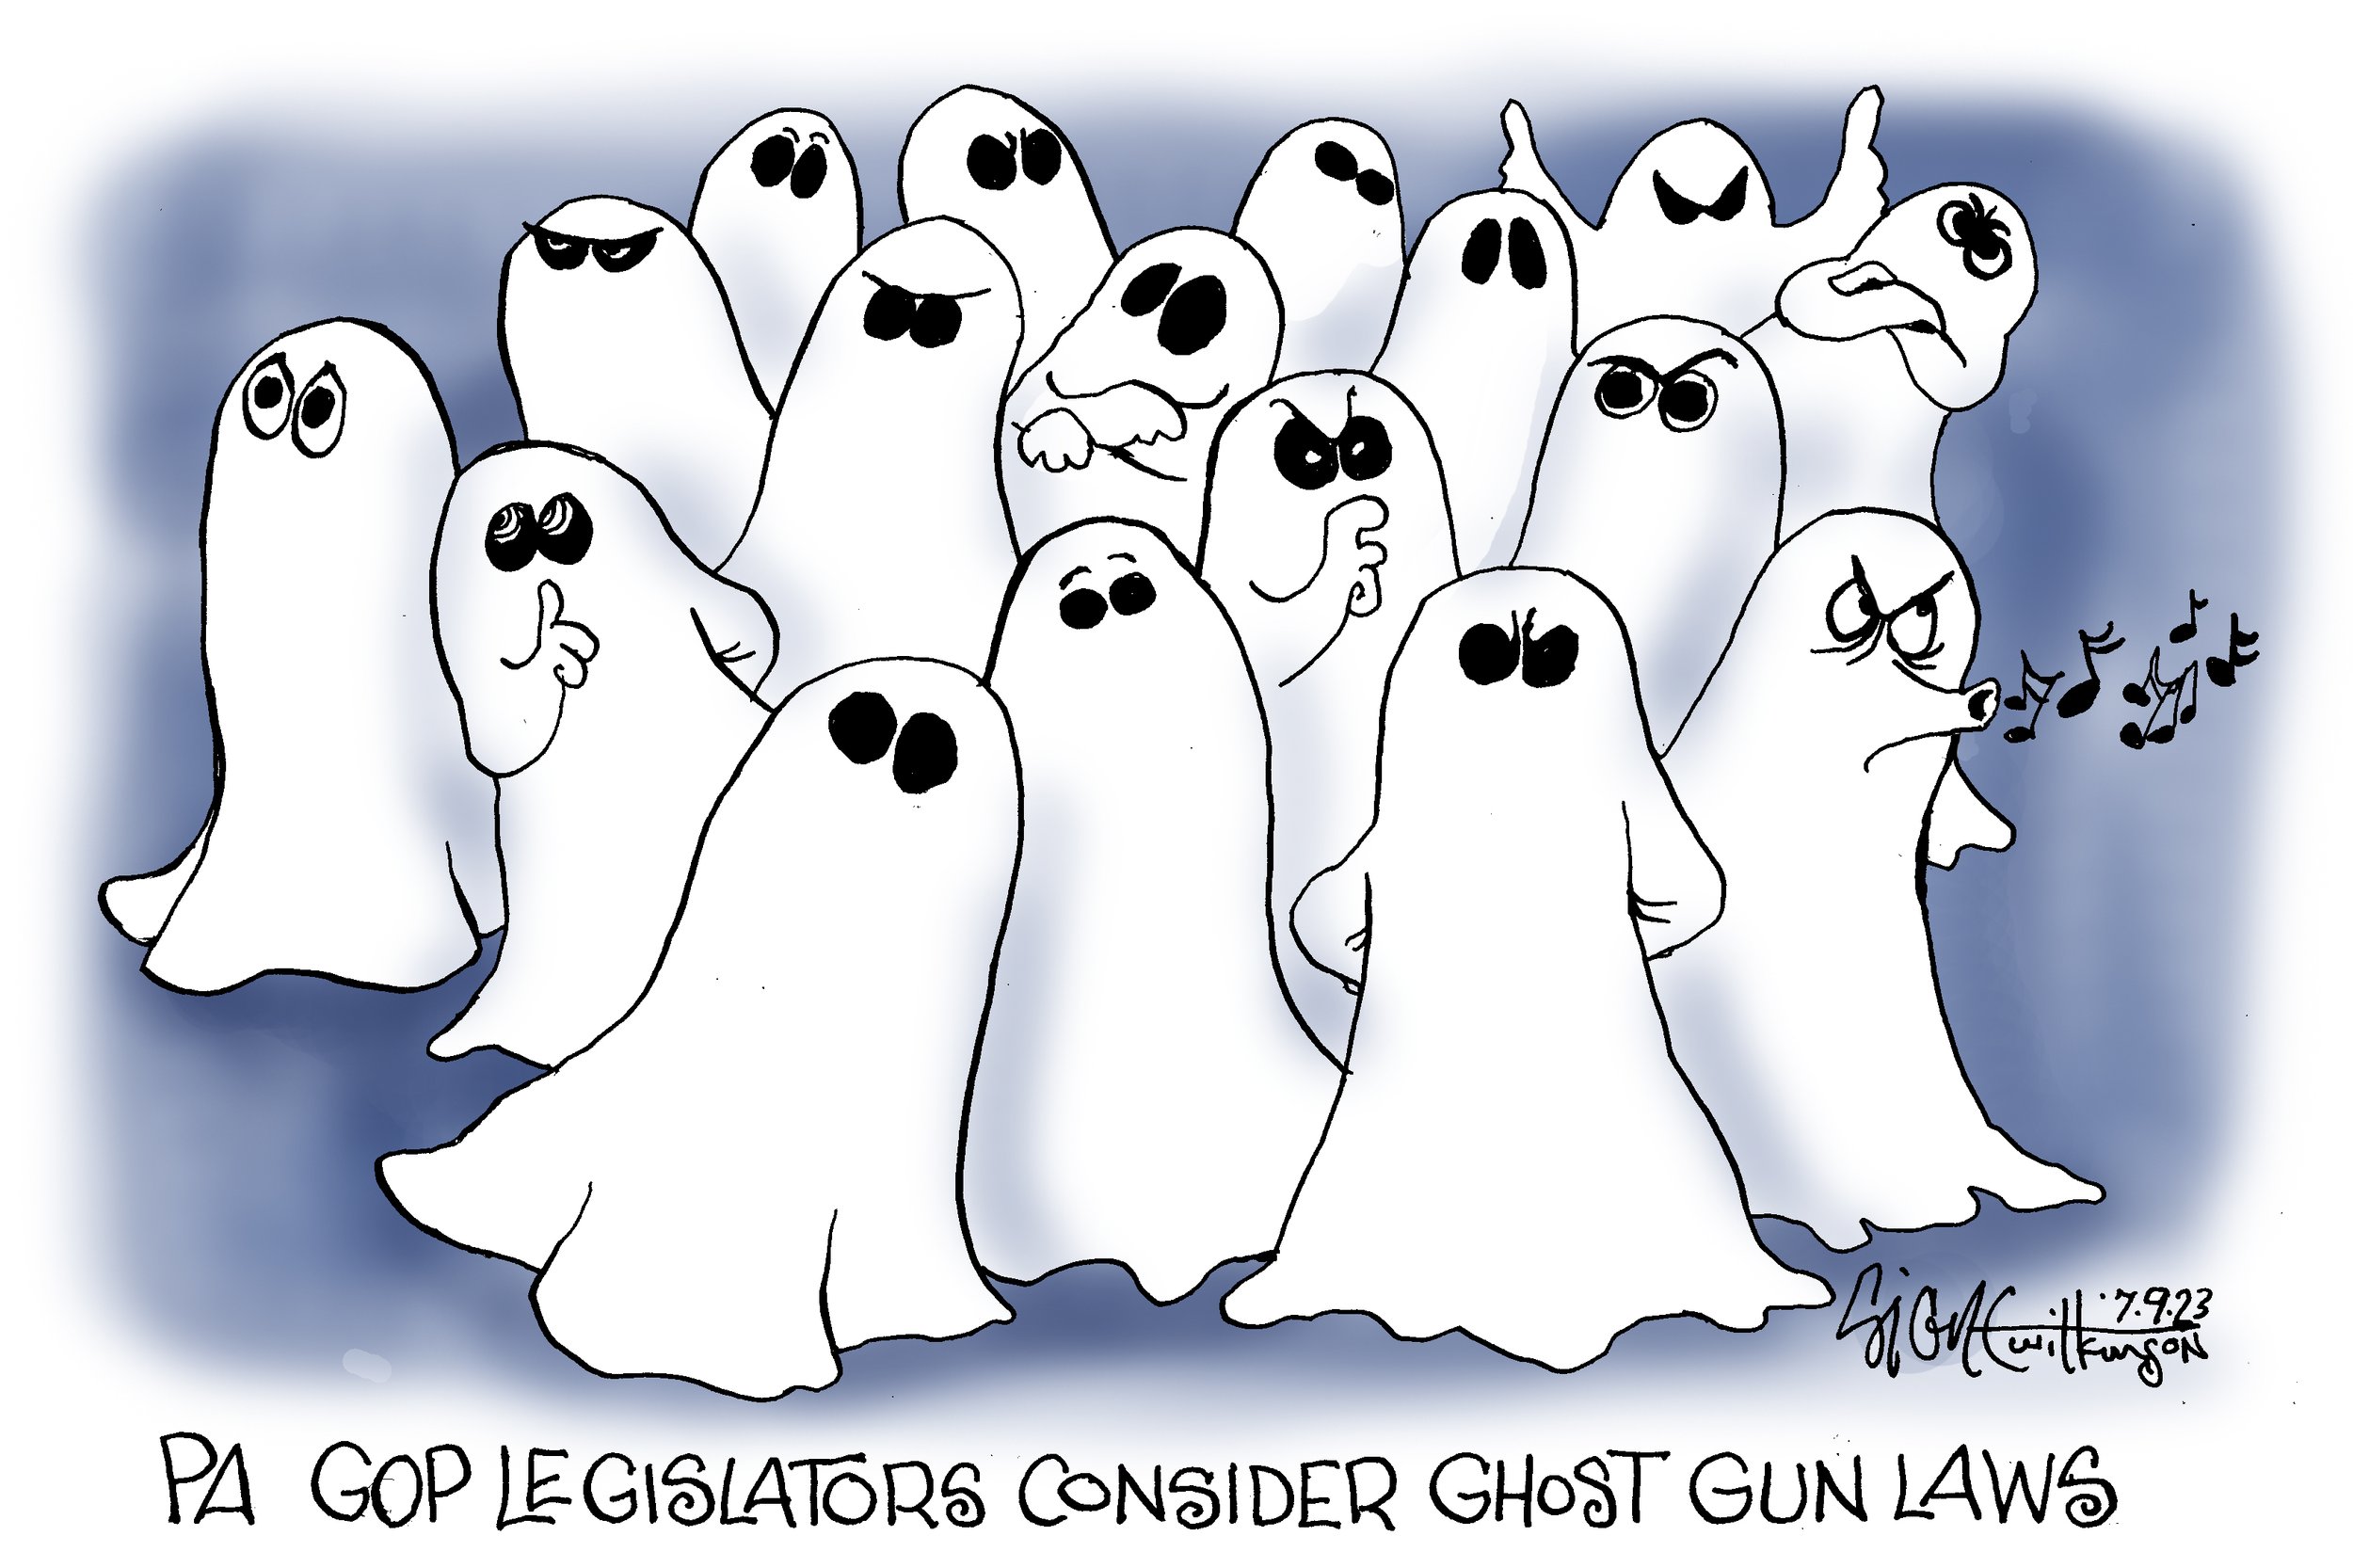 07-09-23 Ghost gun legislation 07-09-23T.jpg